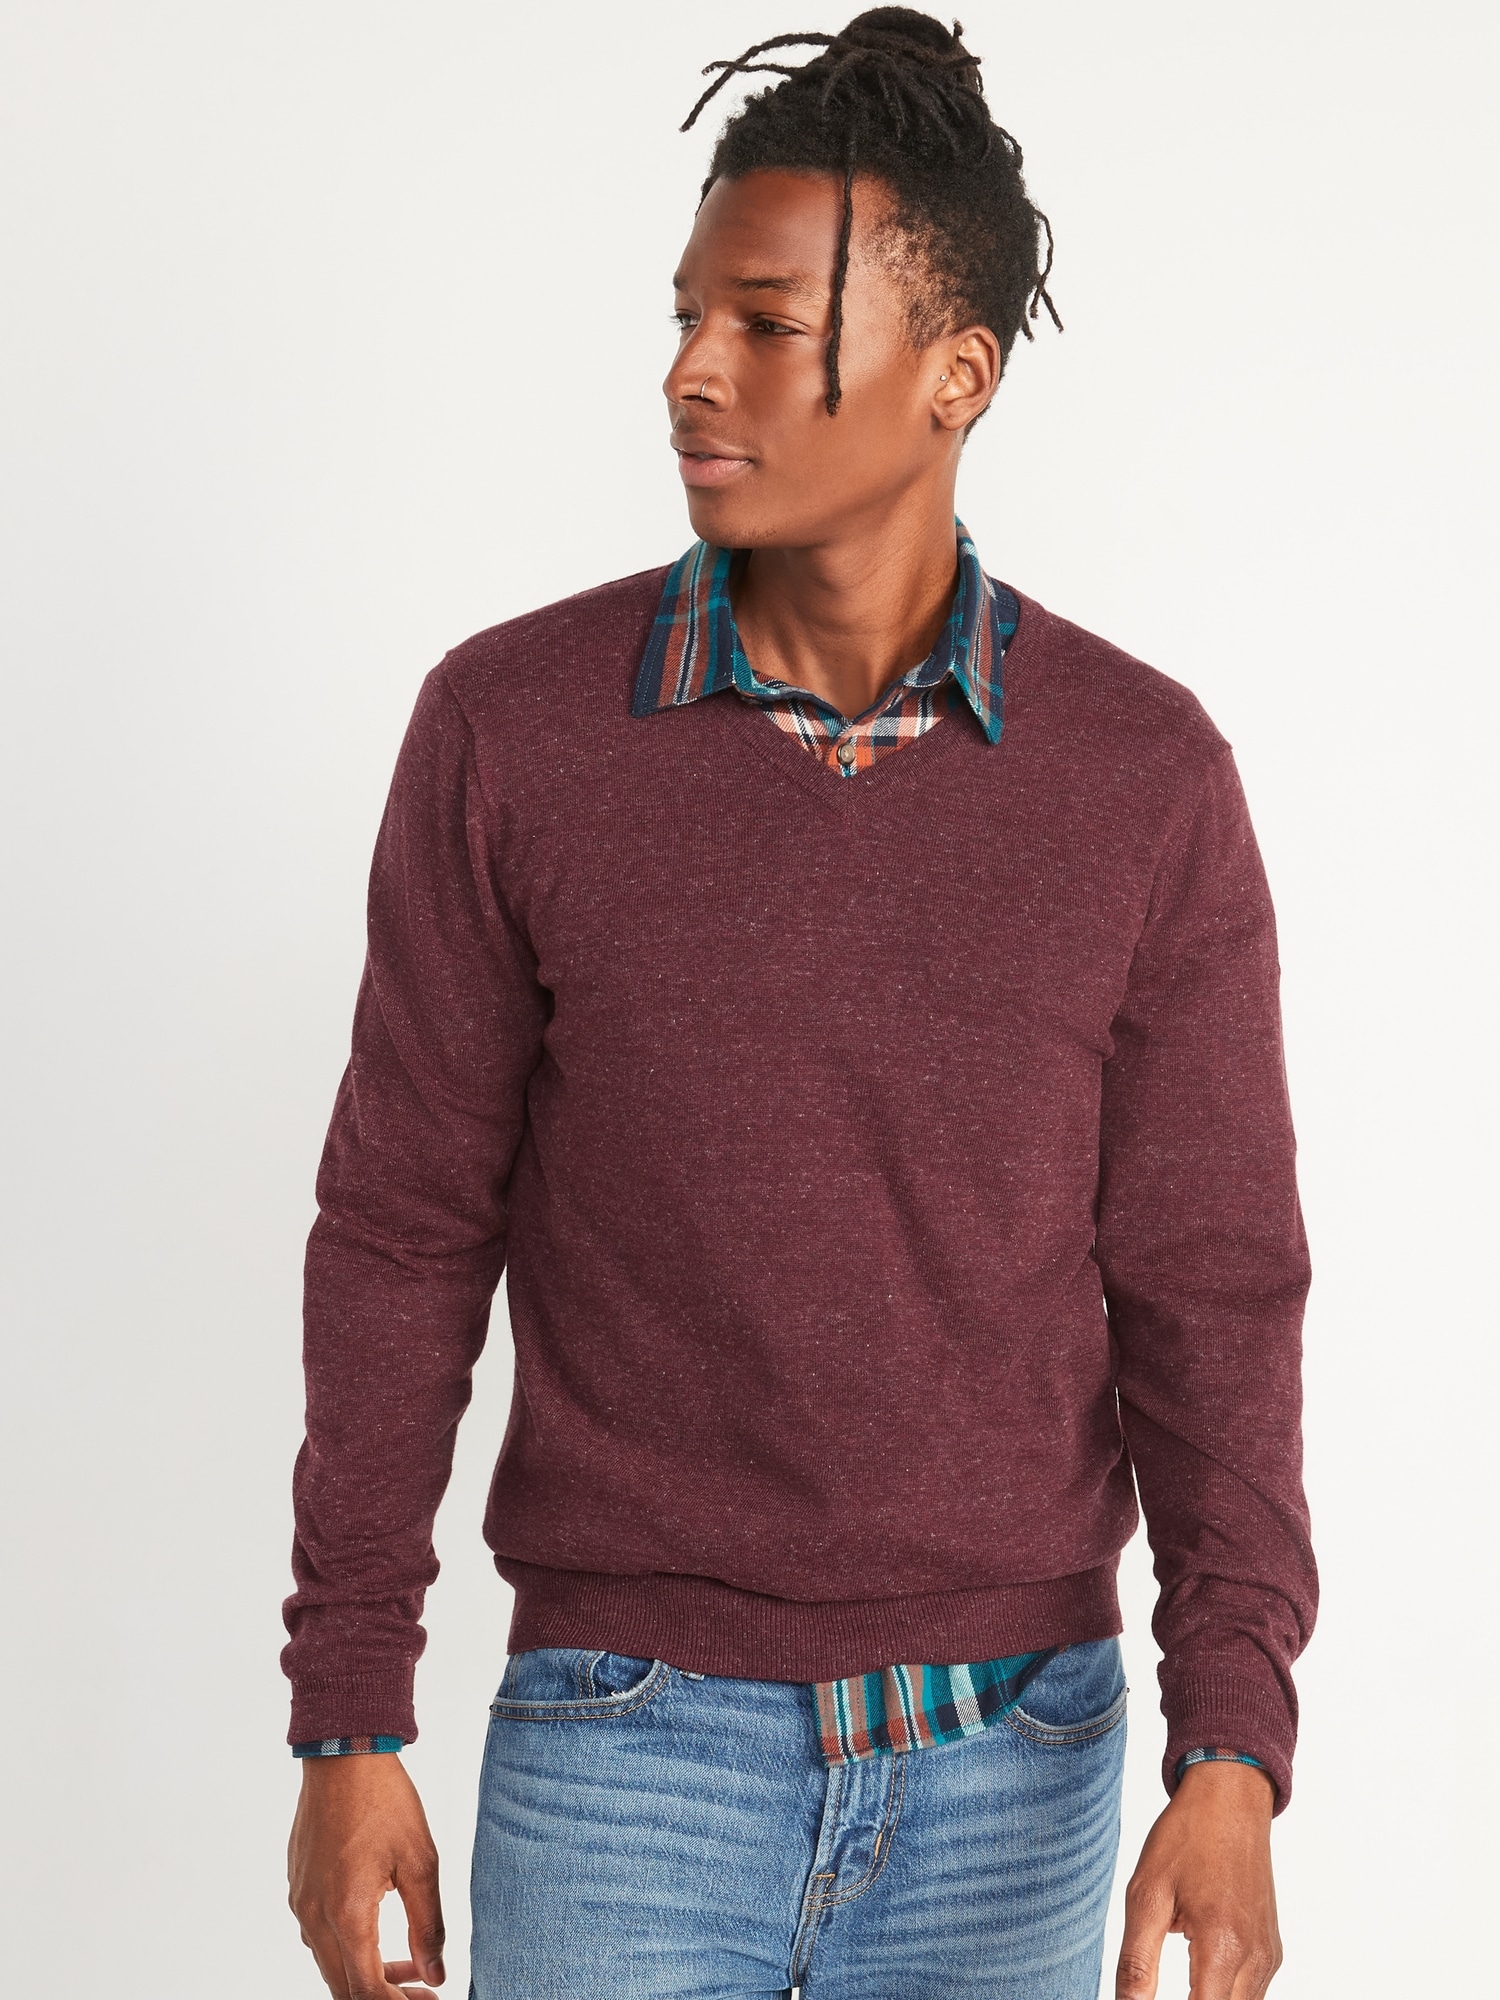 V-Neck Sweater for Men | Old Navy